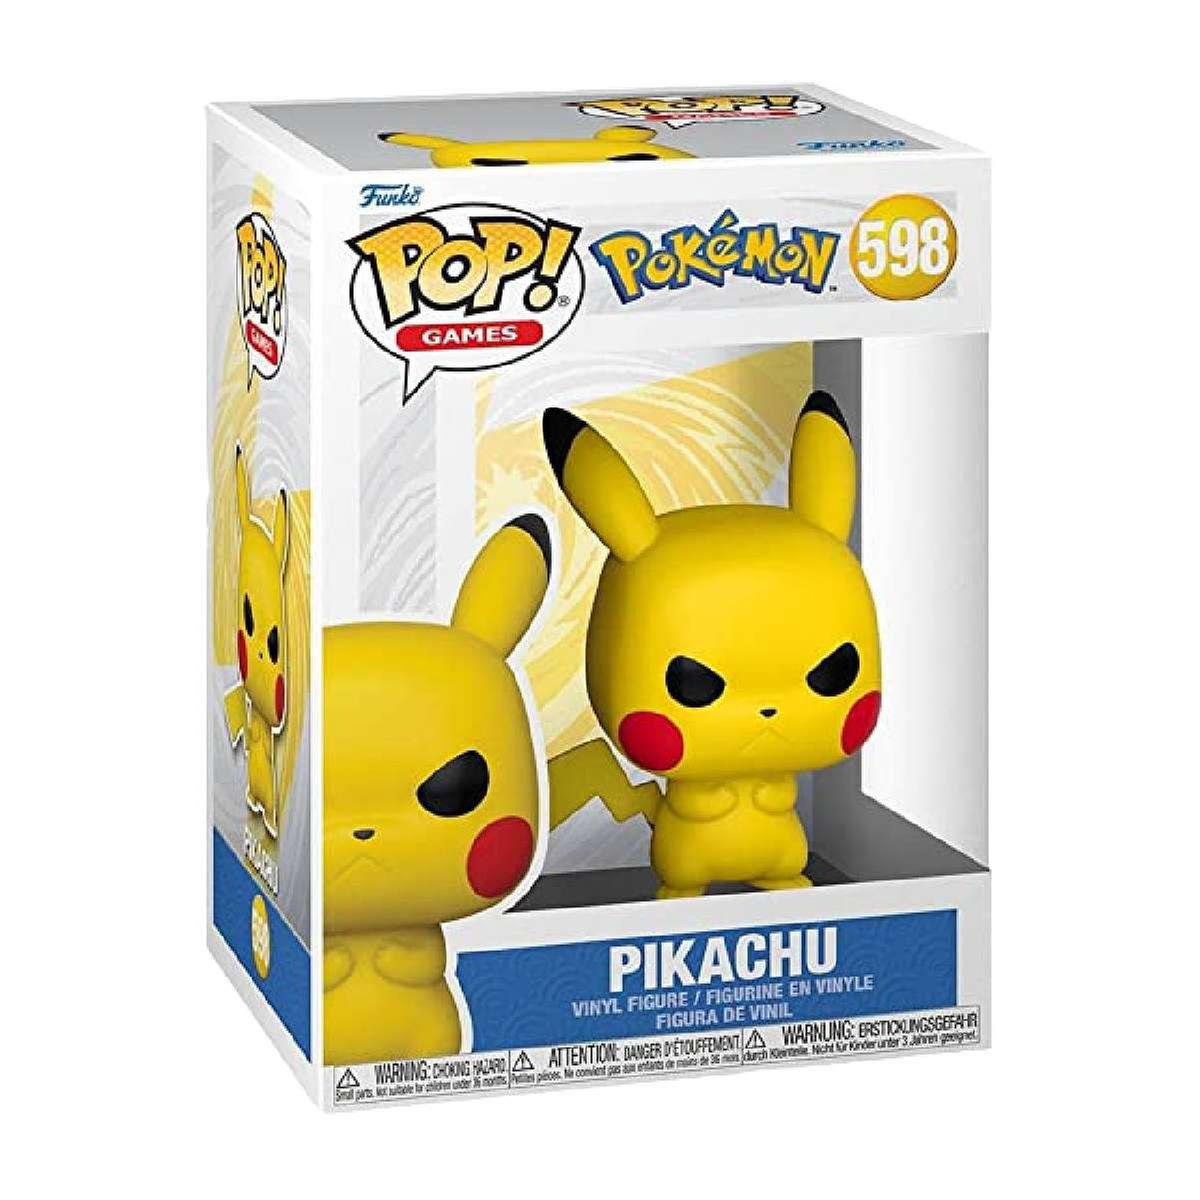 Buy Pop! Pikachu at Funko.